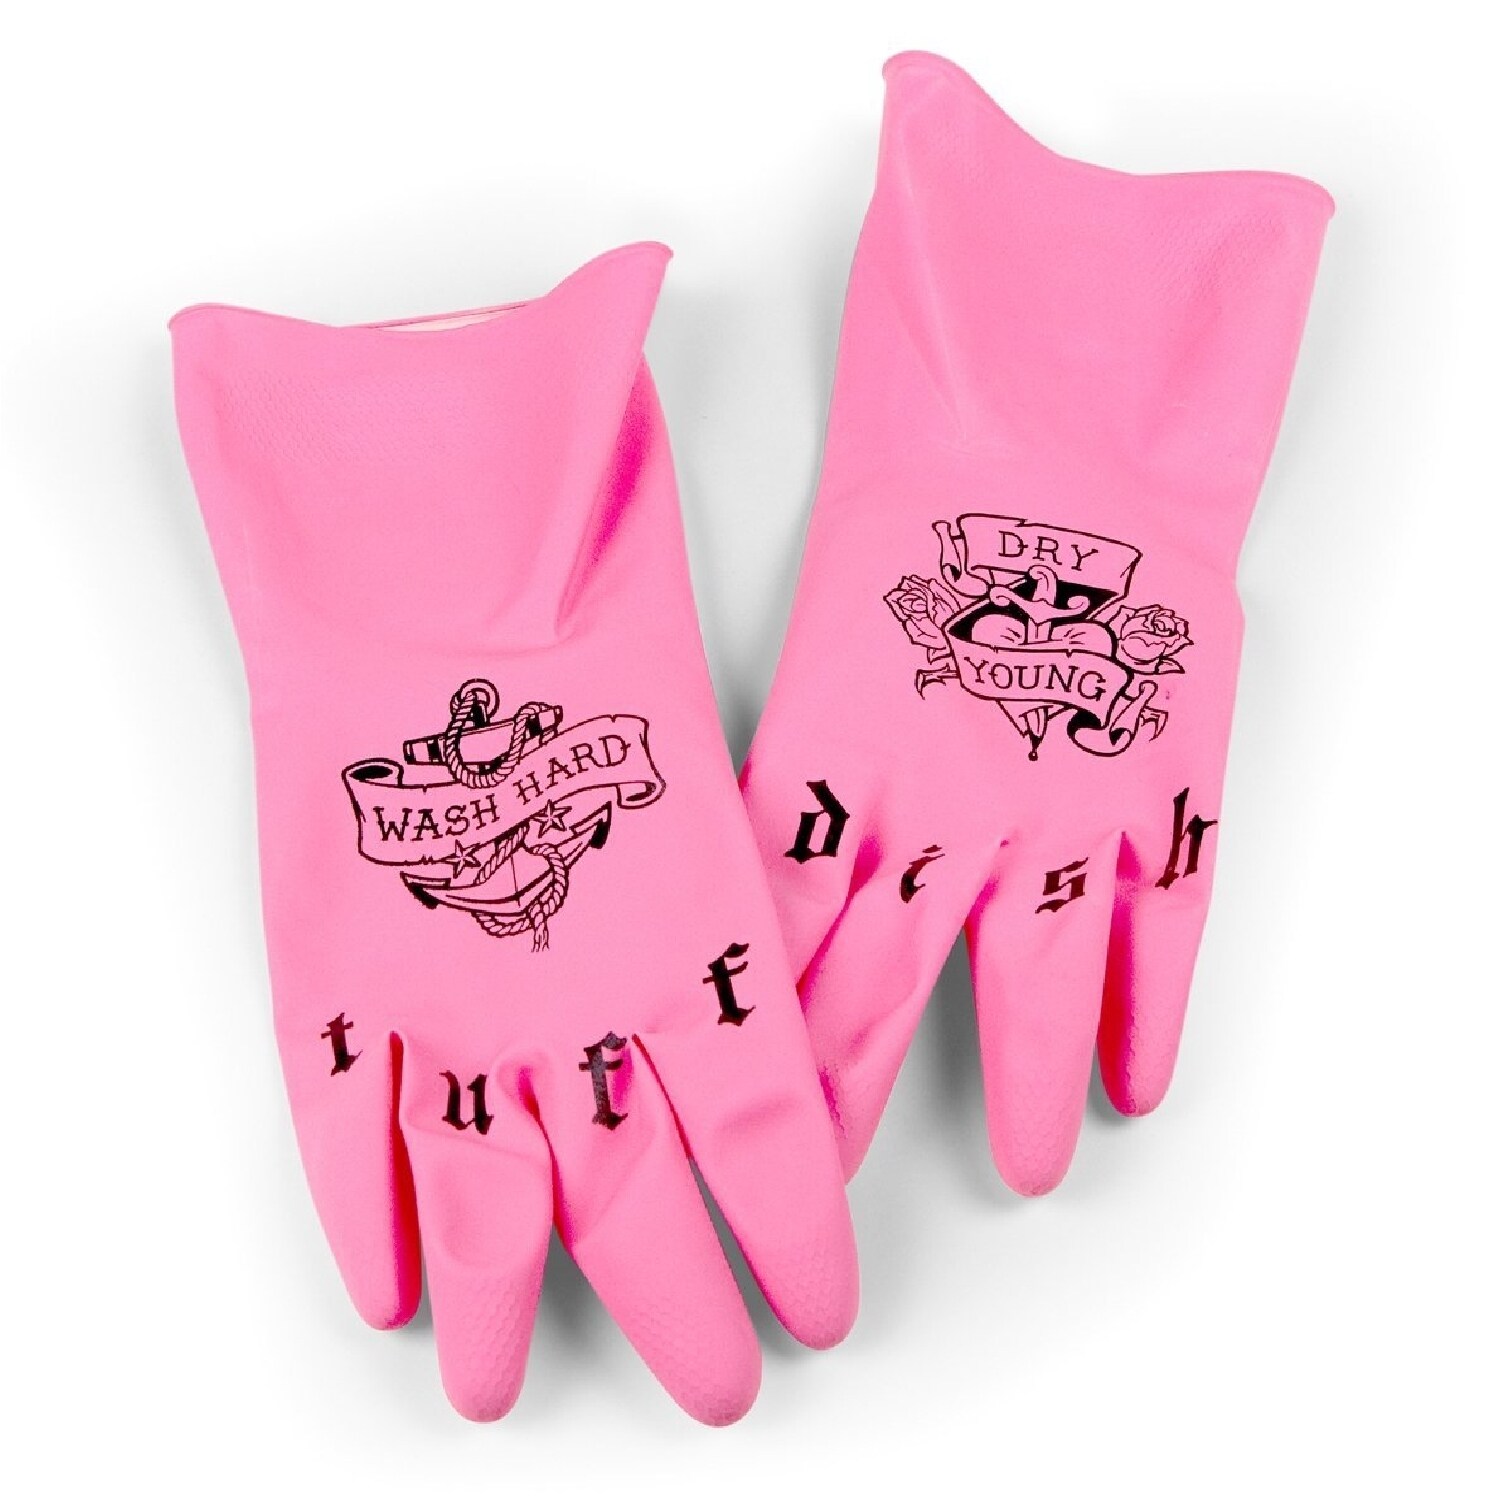 pink dish gloves